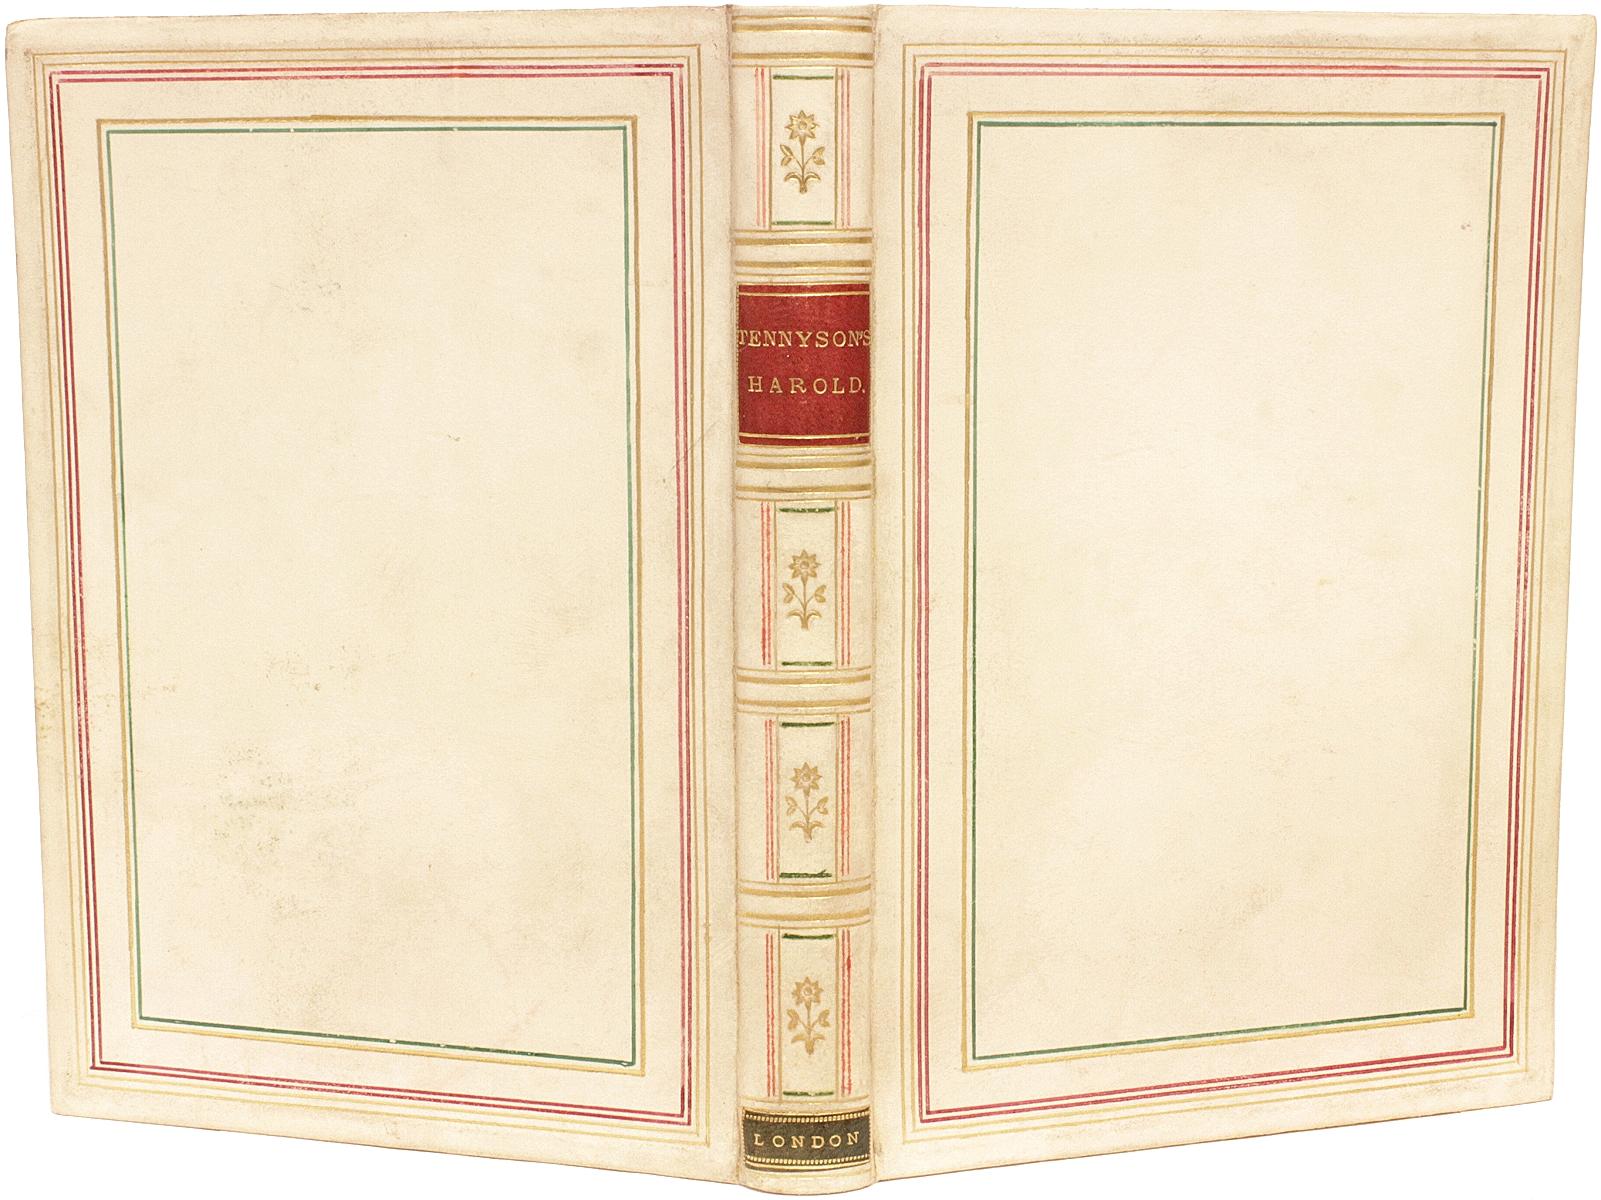 British Tennyson, Alfred, Harold a Drama, 1877, Bound in a Fine Full Vellum Binding For Sale